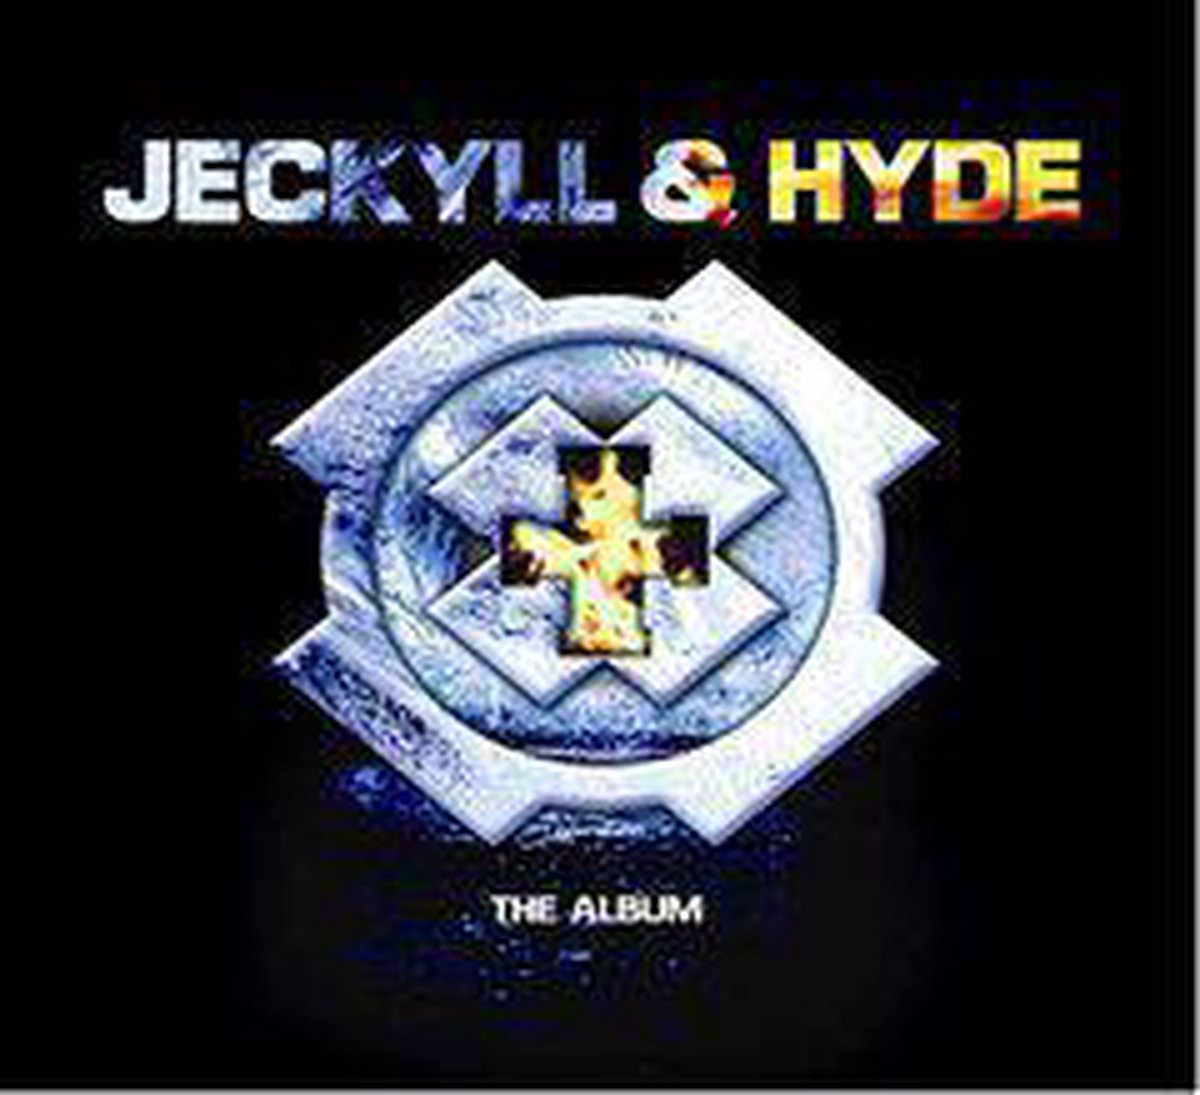 The Album - Jeckyll & Hyde